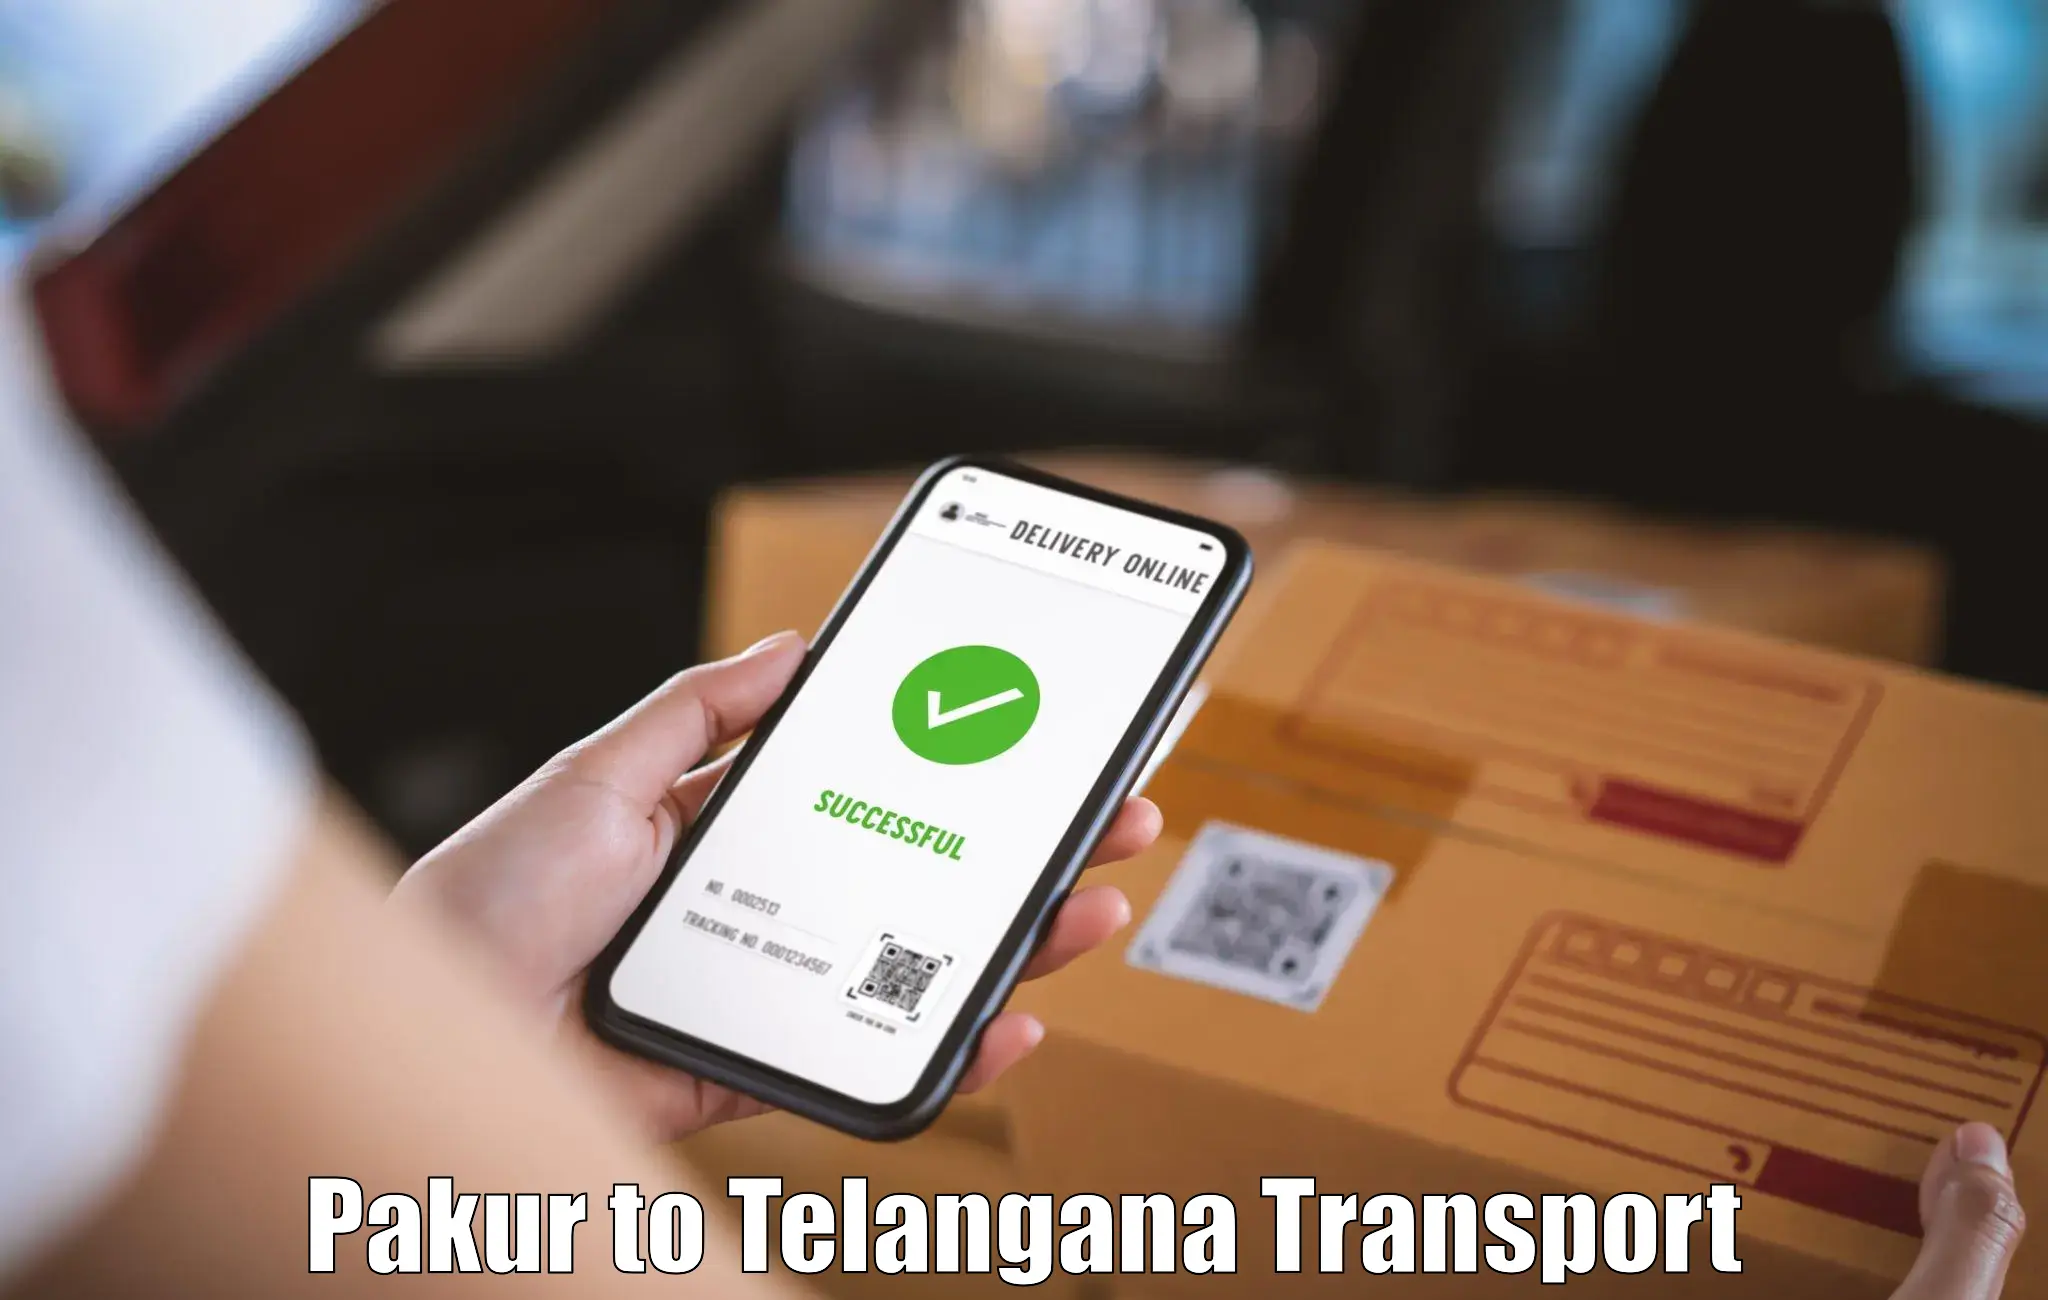 Transport shared services Pakur to Jangaon